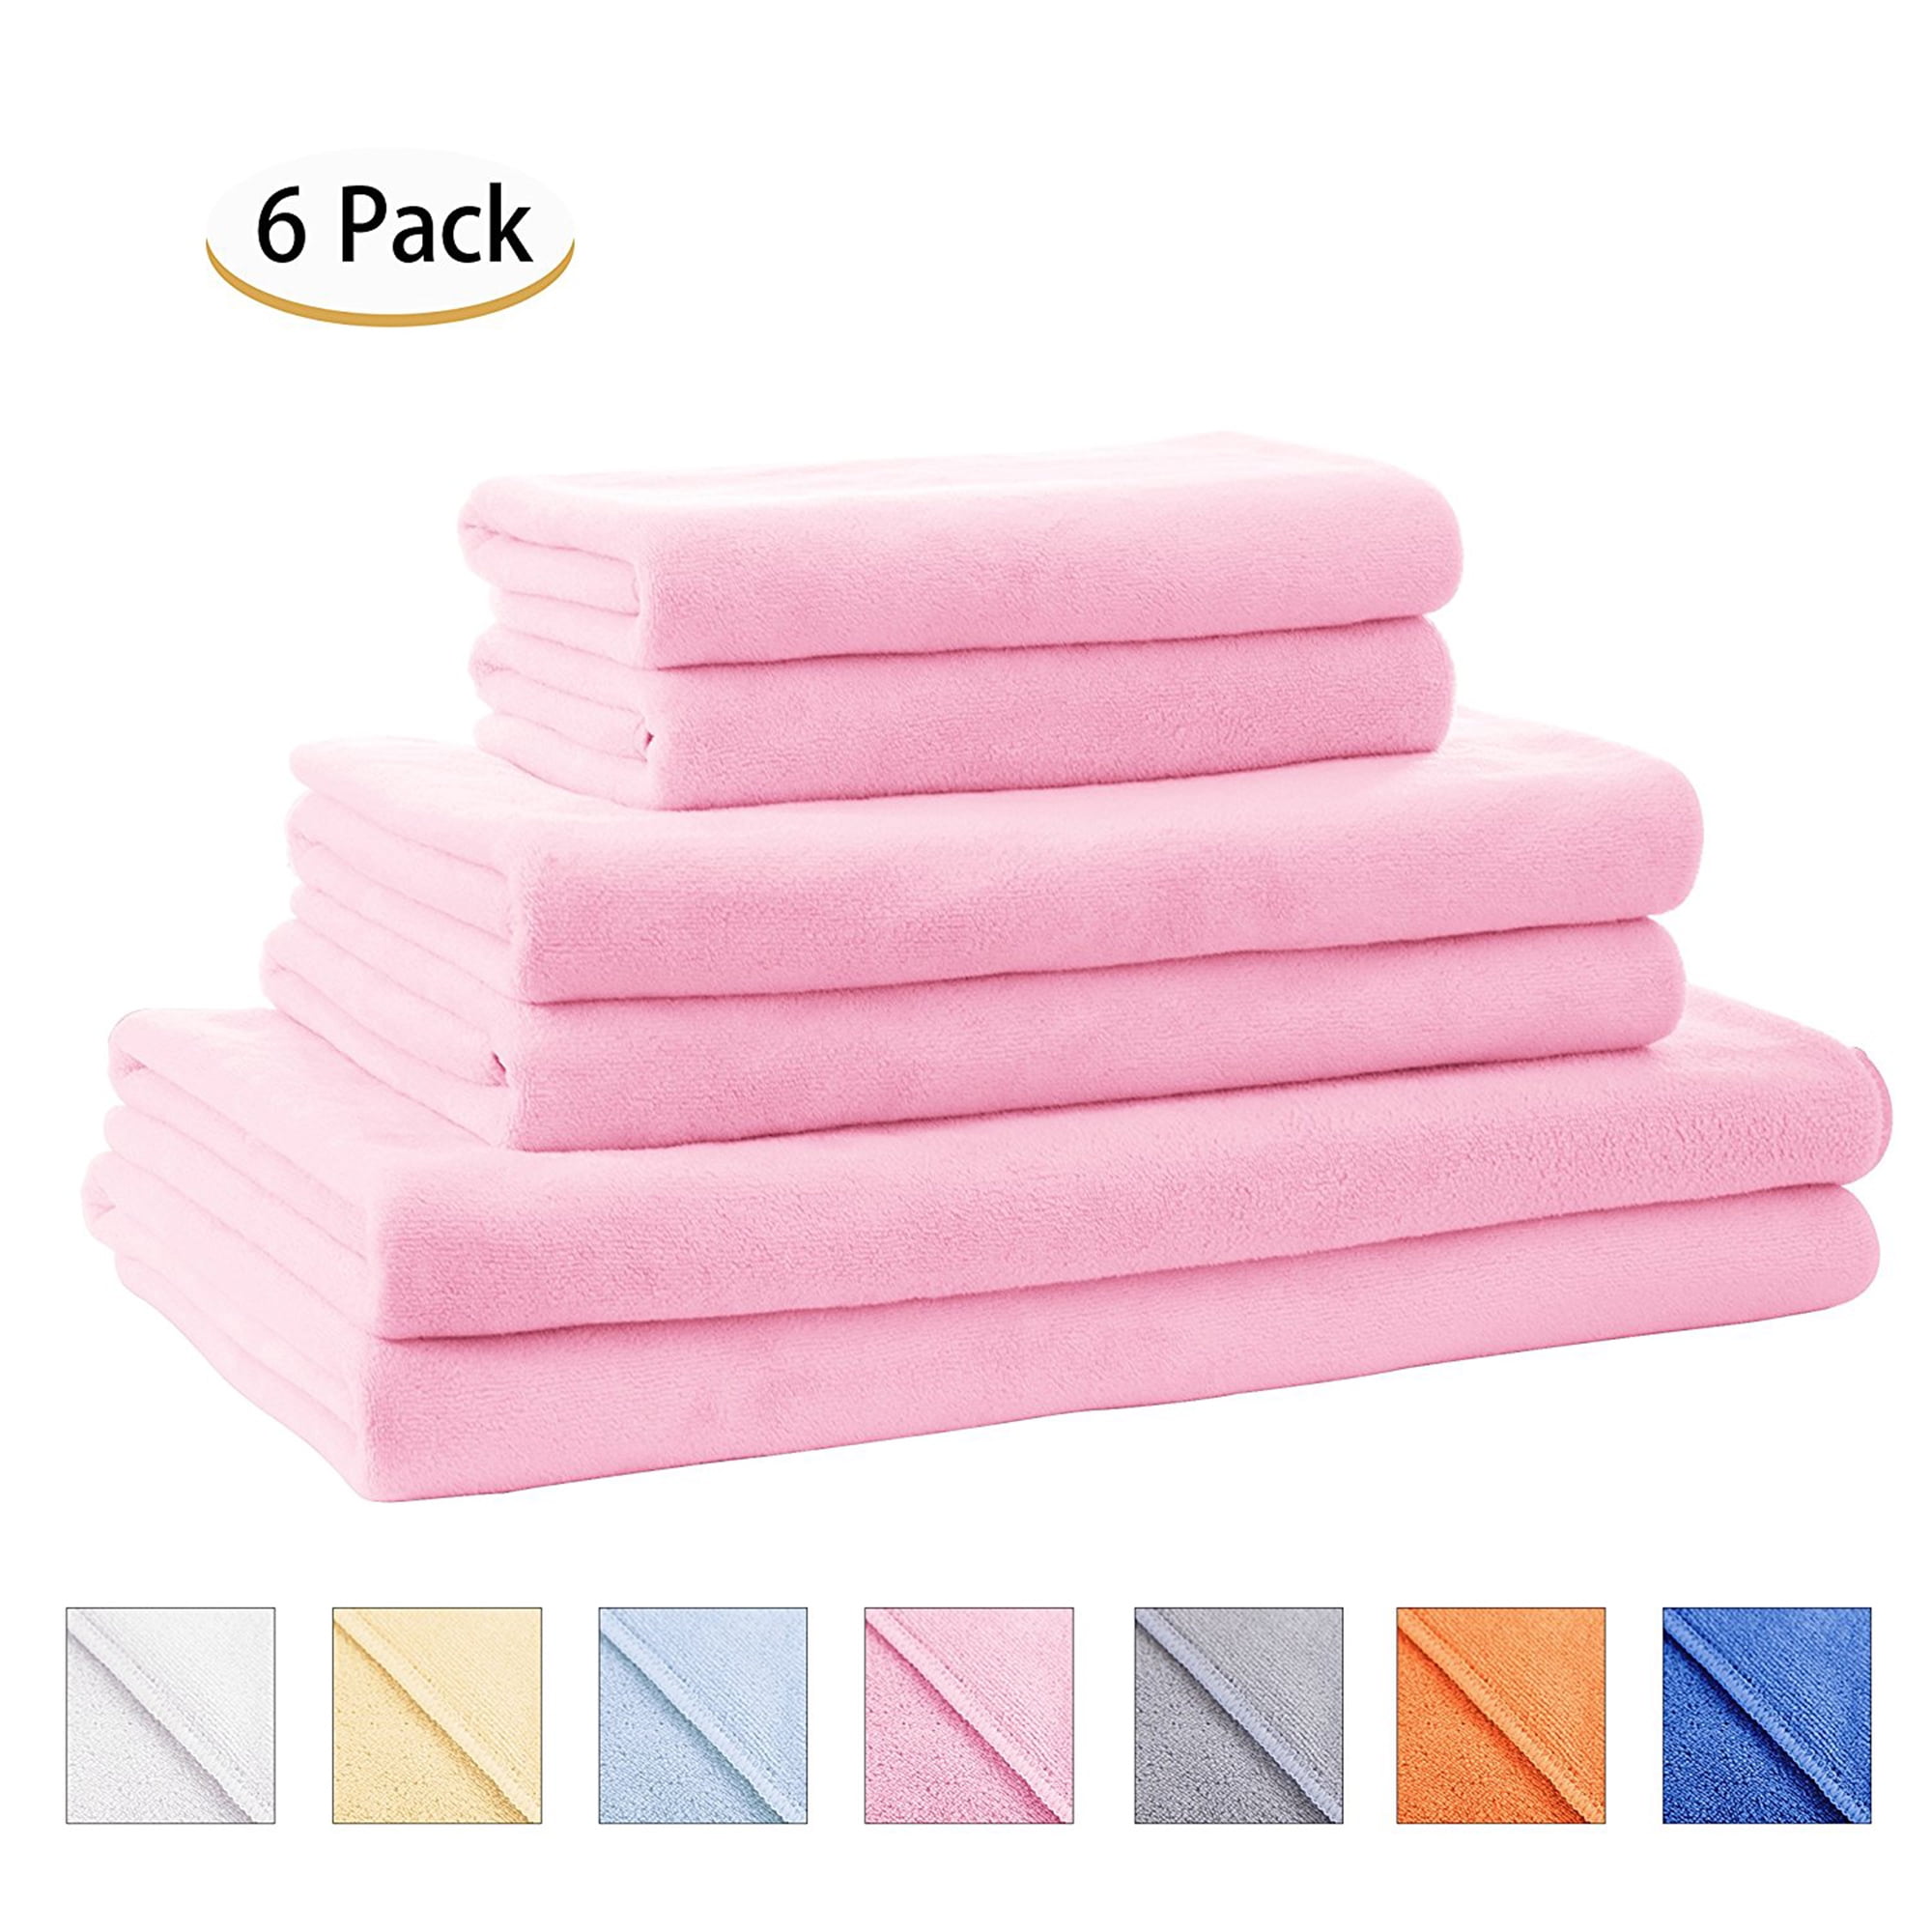 SOFTOWN Super Soft Premium Family Microfiber Bath Towel Set Quick Dry Ultra Absorbent 4 Large Bath Towels Bathroom Beach